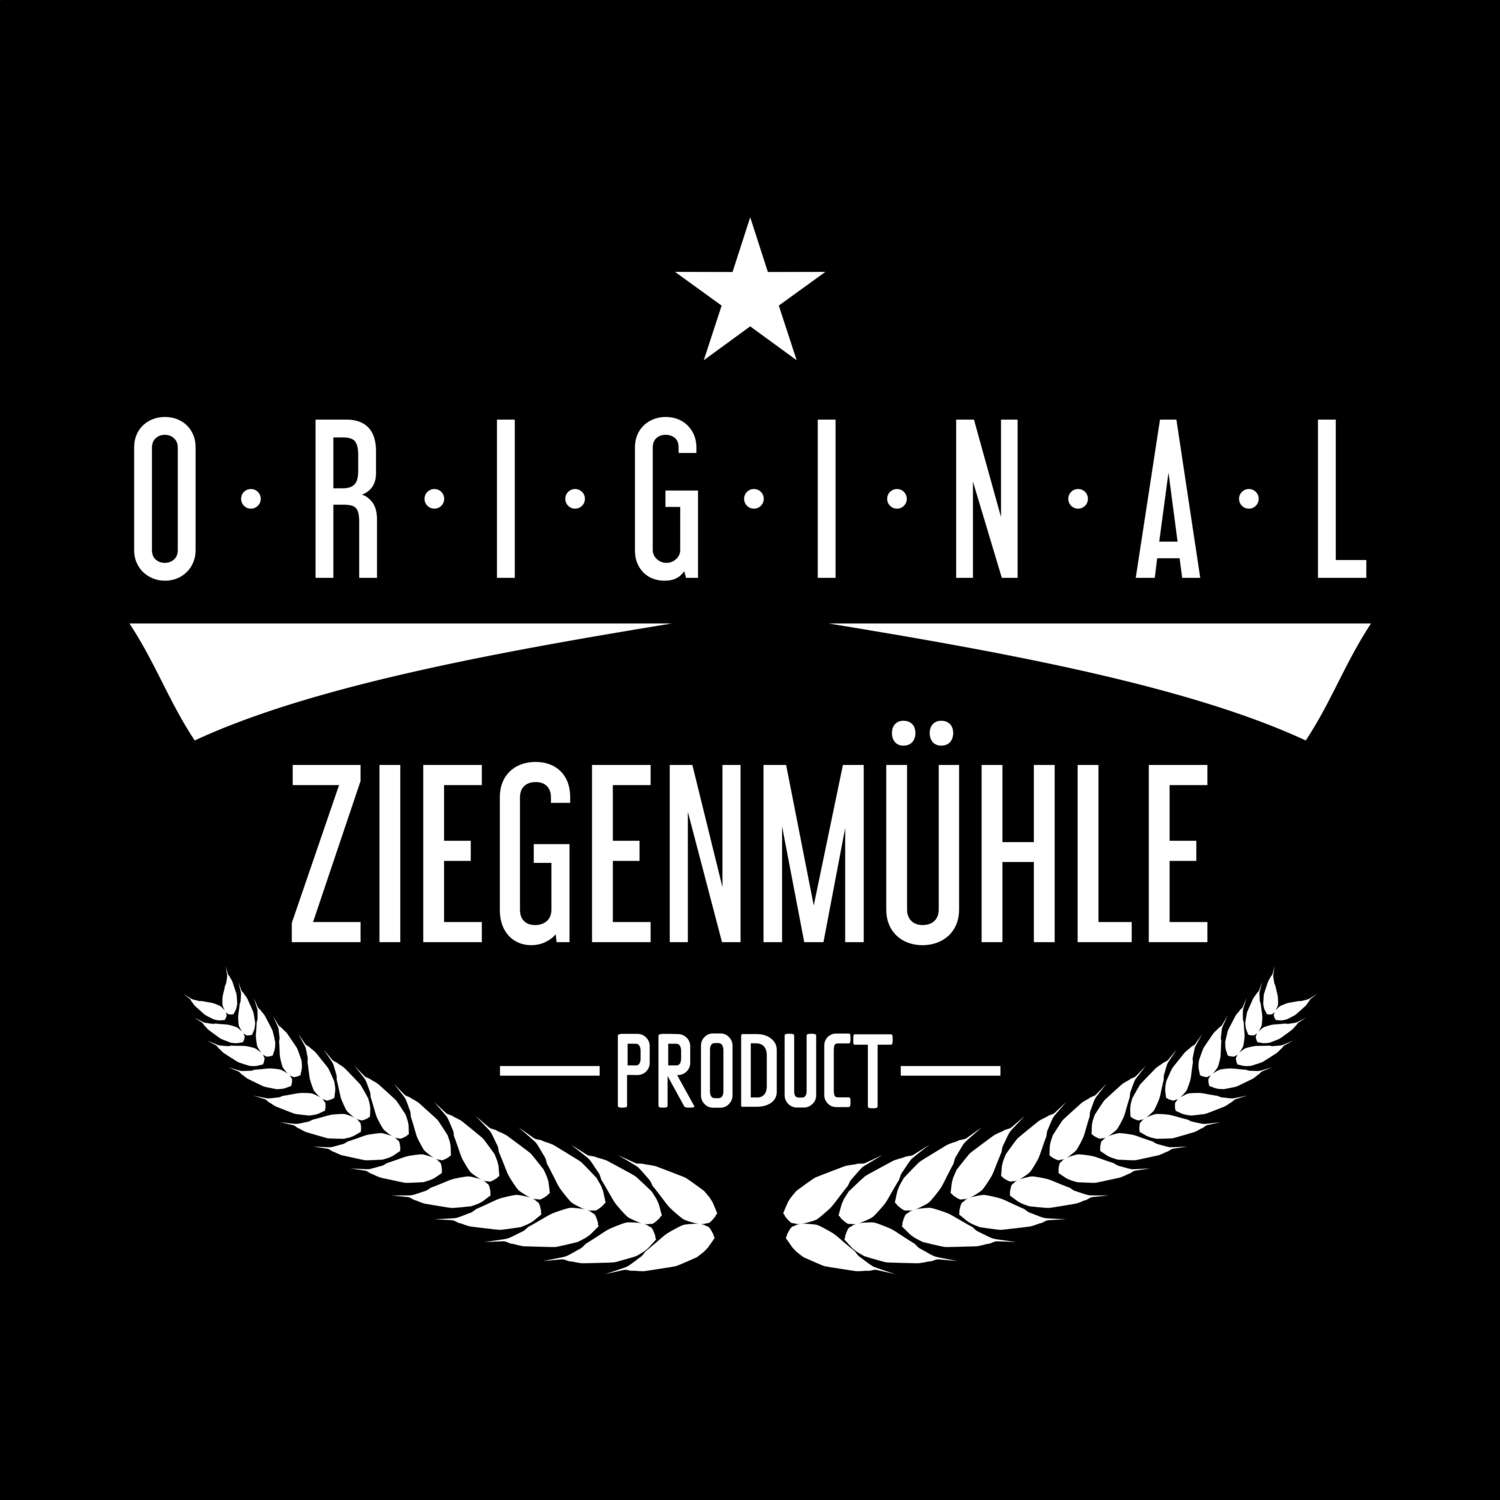 Ziegenmühle T-Shirt »Original Product«